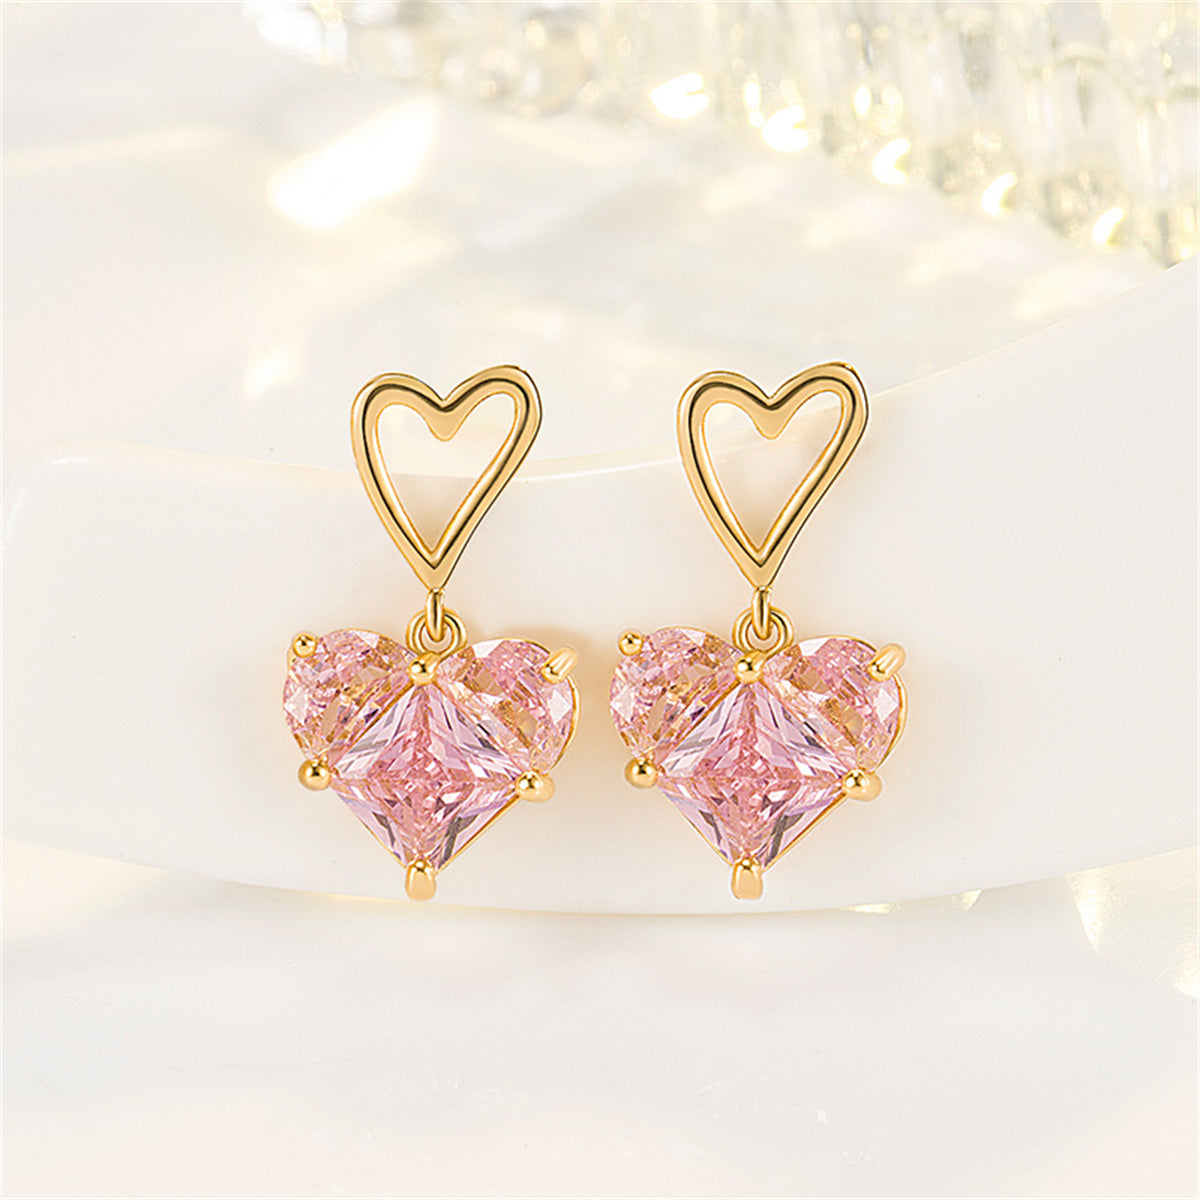 Crystal & 18K Gold-Plated Openwork Heart Drop Earrings